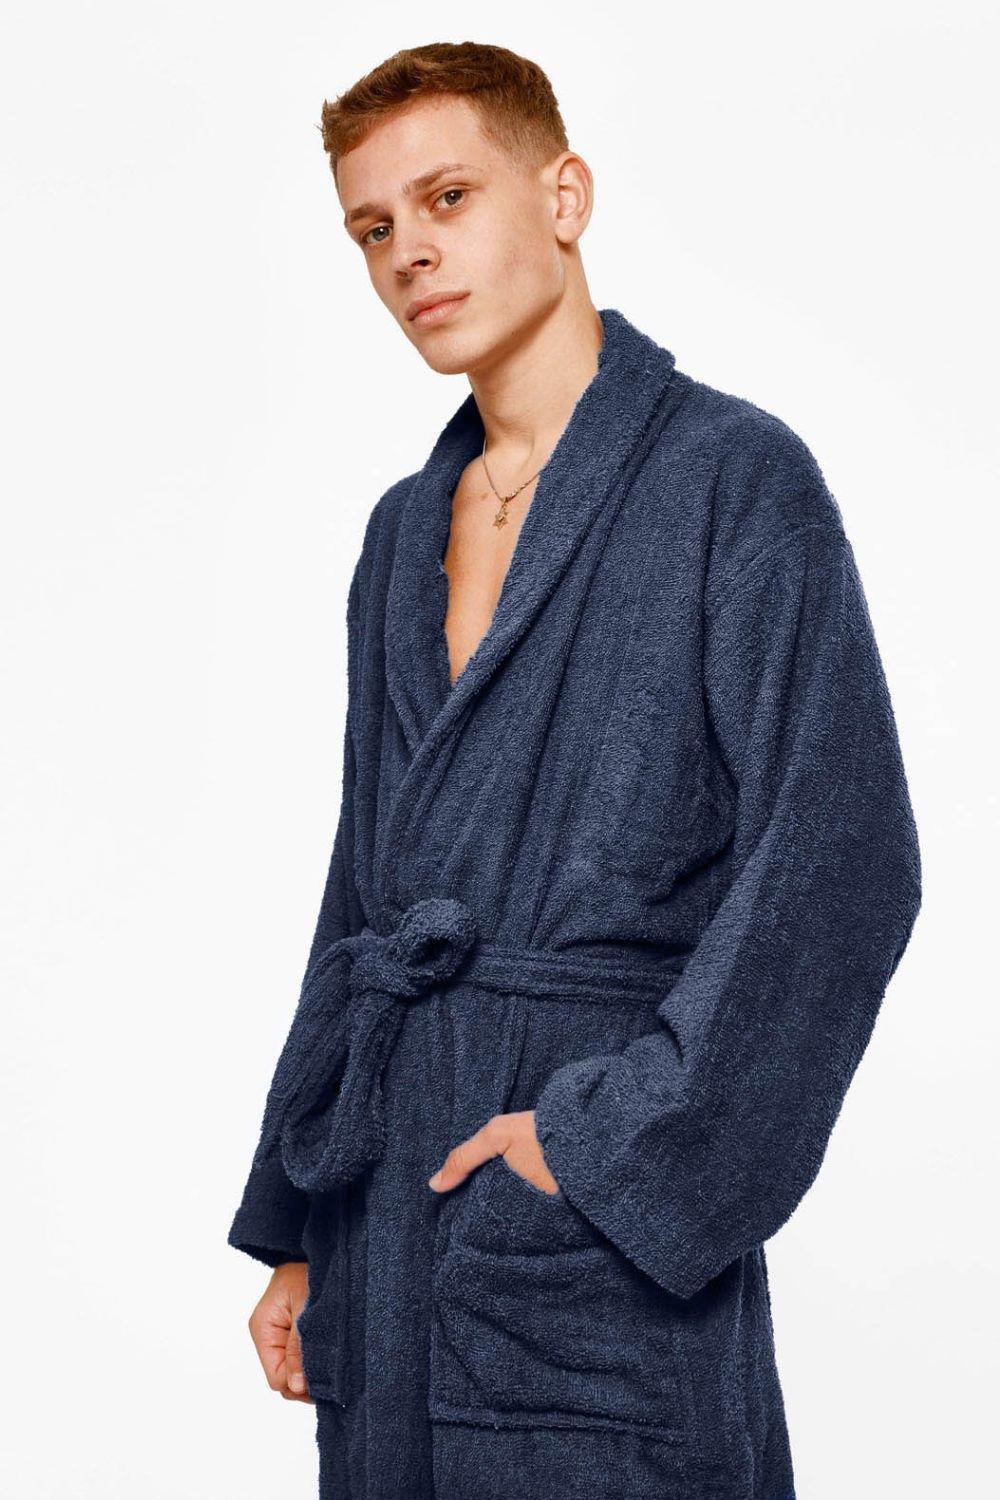 Towel Bath Robe Mens Dressing Gown 100% Cotton